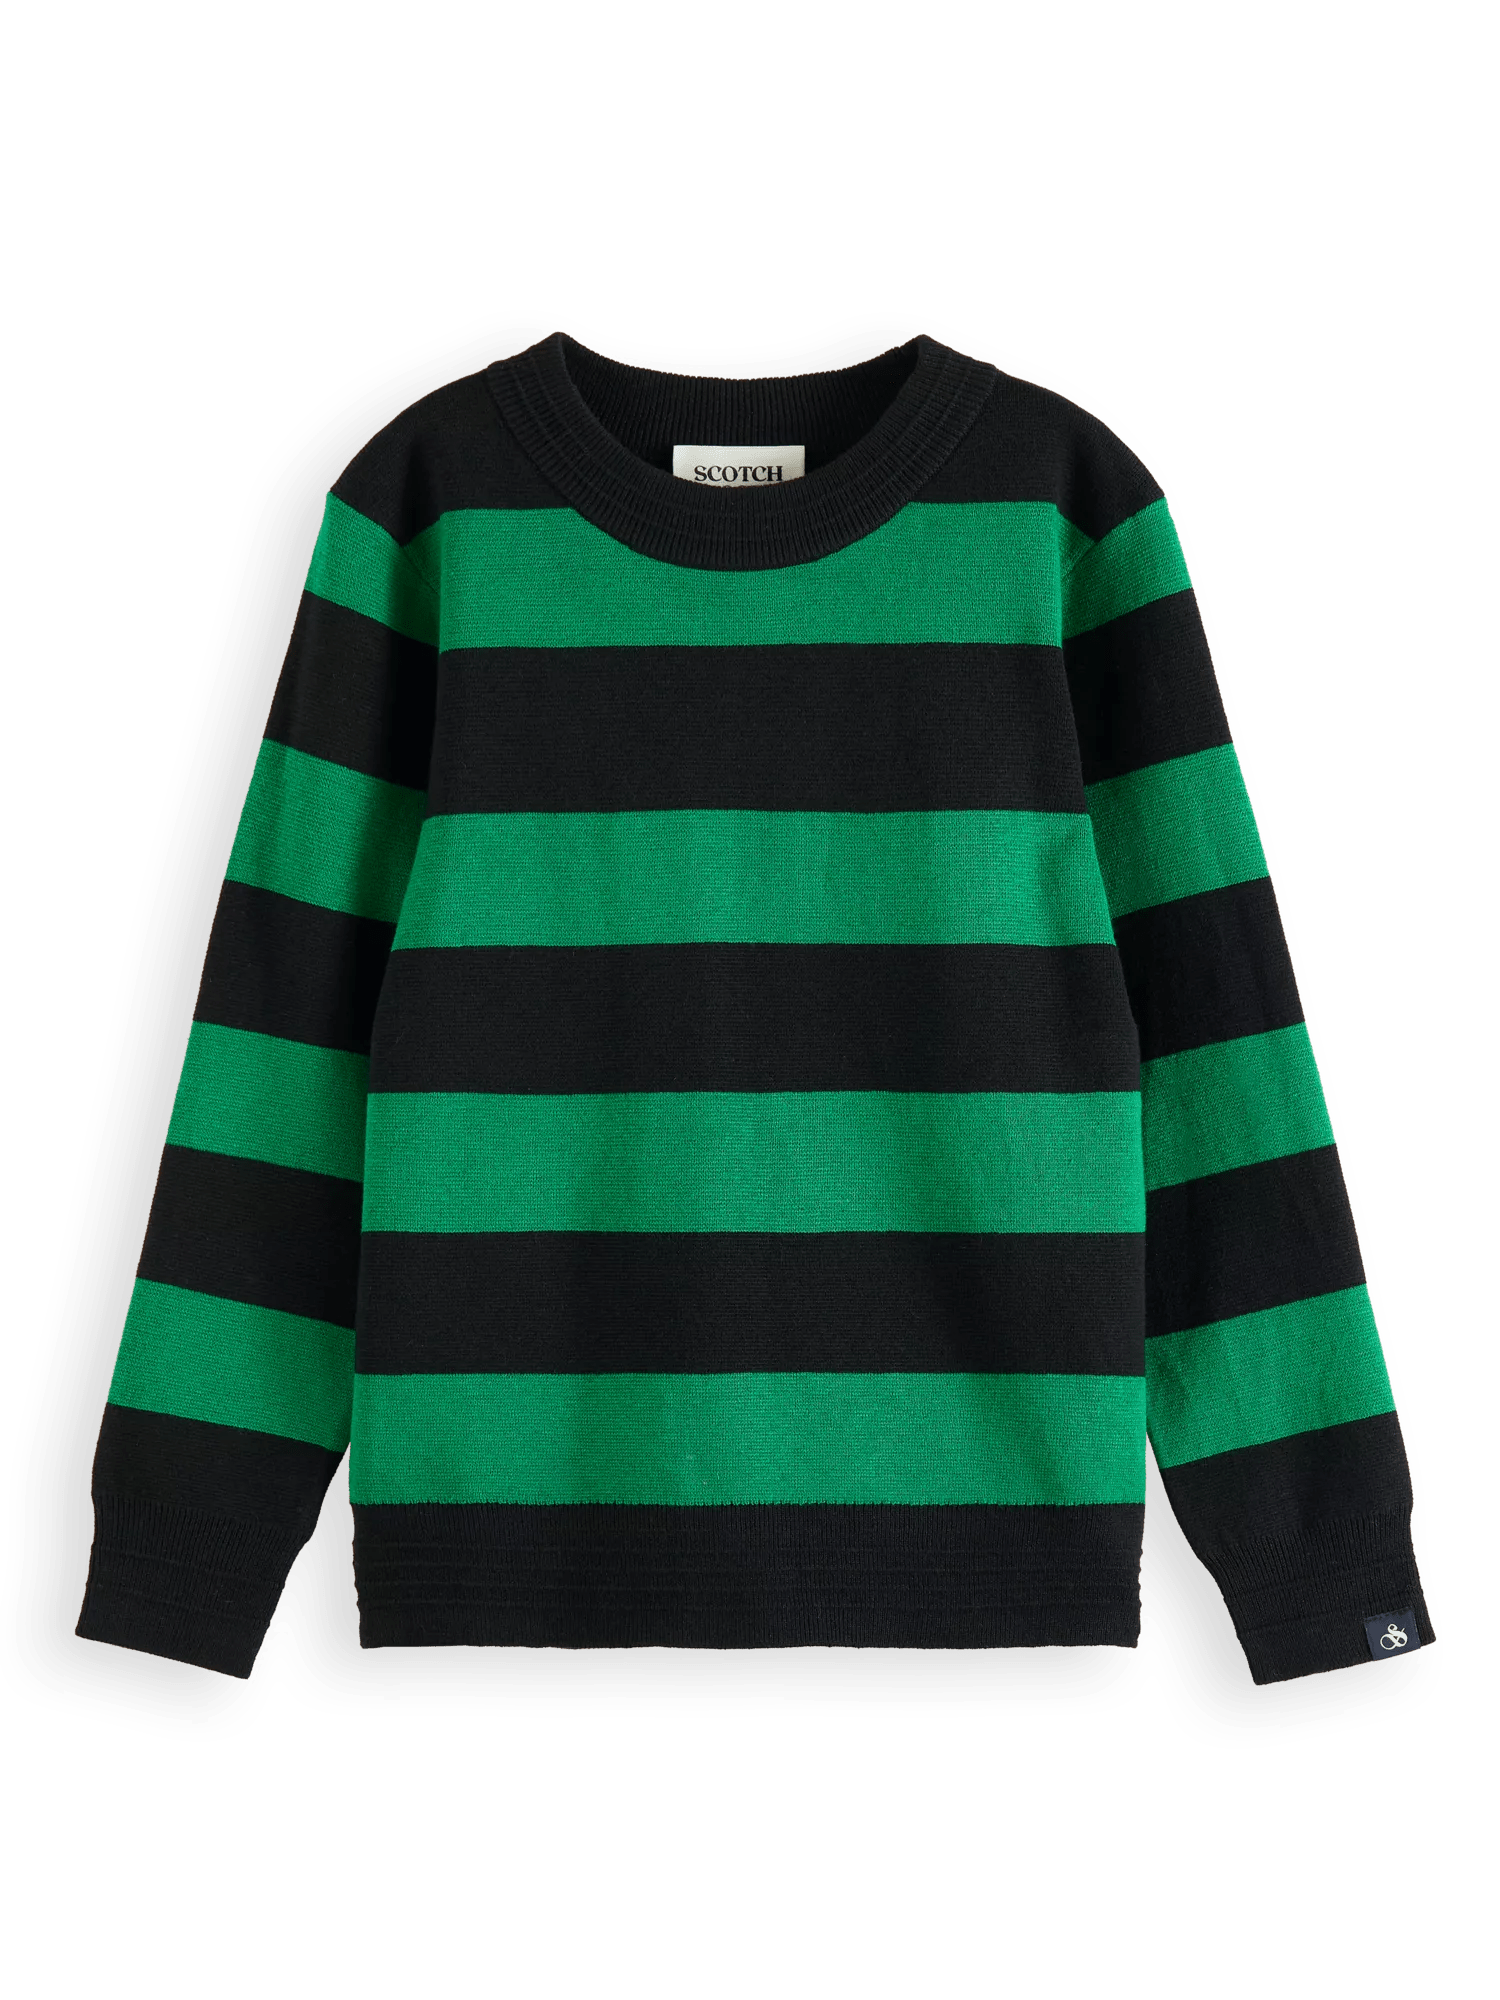 Scotch & Soda Knitted crewneck sweater FNT